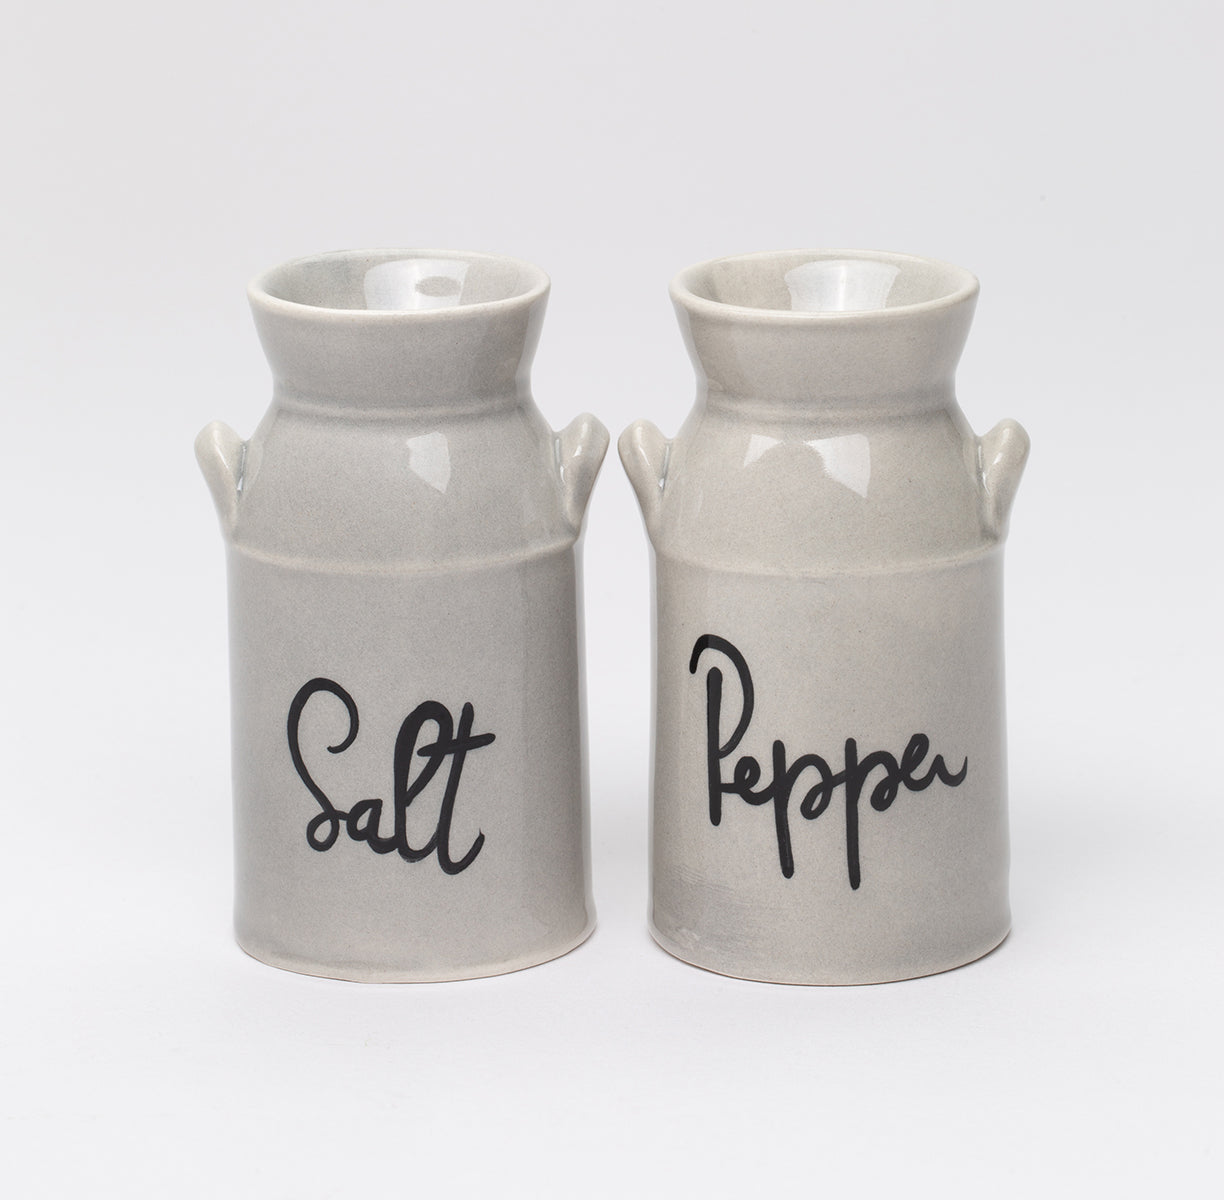 Ceramic Milk Jug Salt And Pepper Shakers, Home Décor, Gift for Her, Mom, Farmhouse Kitchen Décor, Vintage Decor